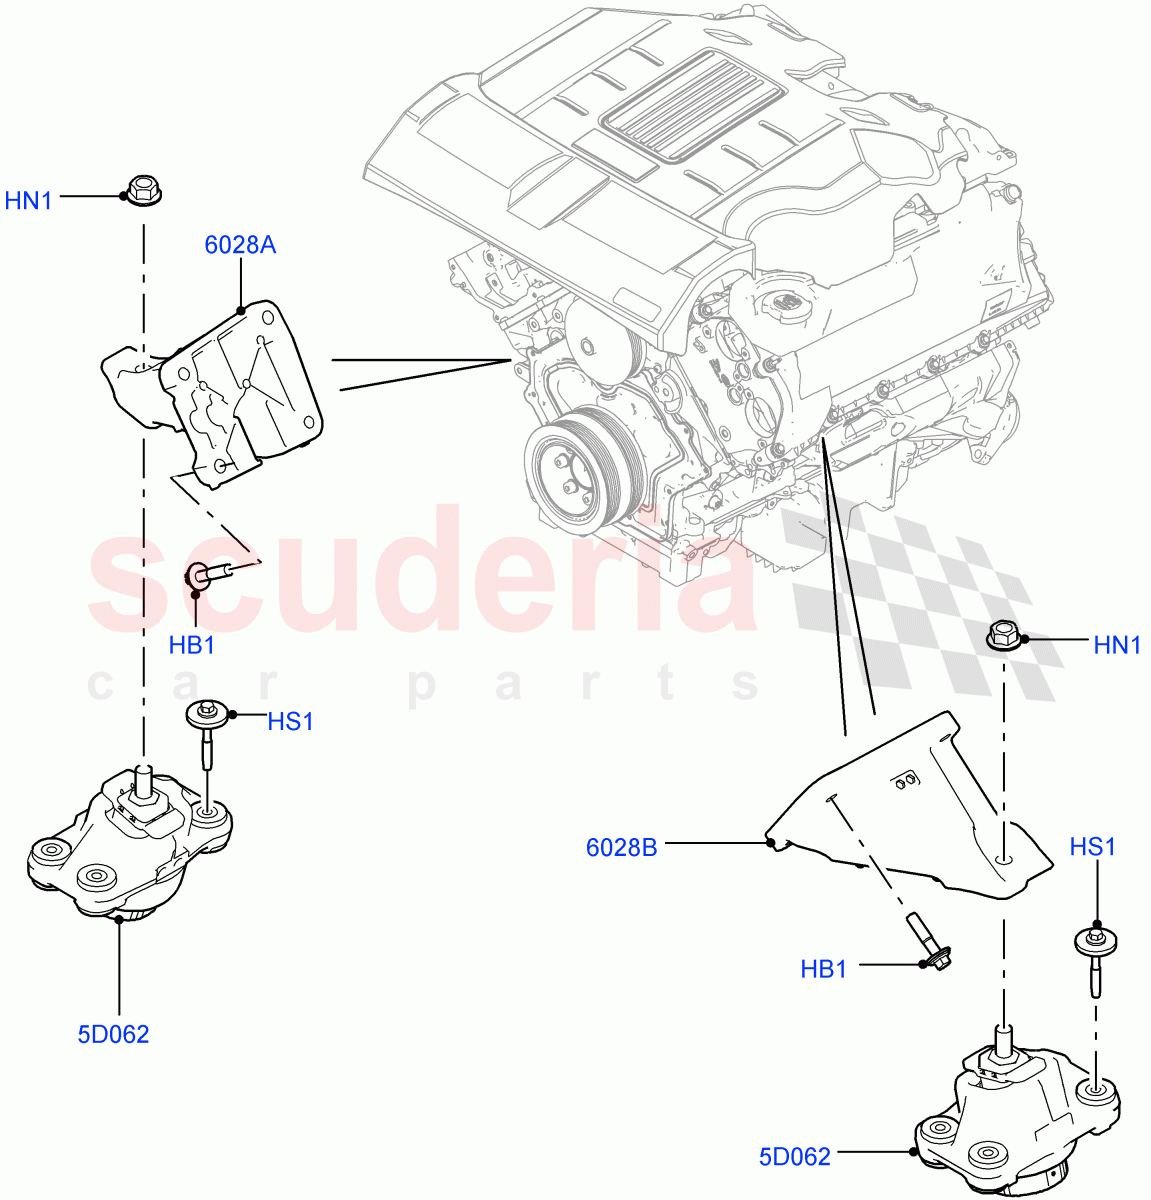 Engine Mounting(3.0L DOHC GDI SC V6 PETROL,5.0L OHC SGDI SC V8 Petrol - AJ133,5.0 Petrol AJ133 DOHC CDA,5.0L P AJ133 DOHC CDA S/C Enhanced) of Land Rover Land Rover Range Rover Sport (2014+) [2.0 Turbo Petrol AJ200P]